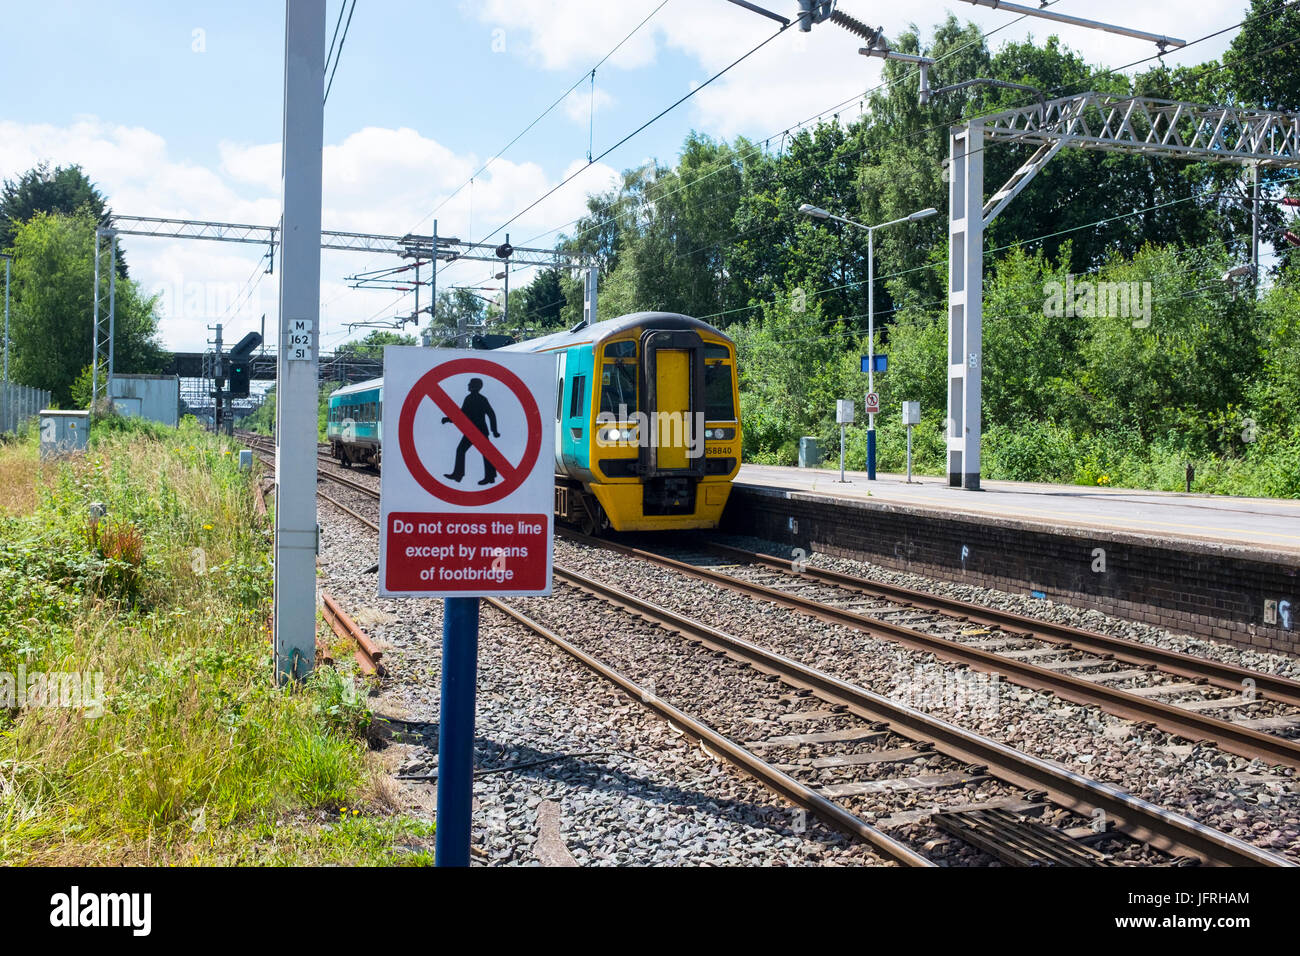 Passengers must not cross railway line warning sign at Sandbach train station Cheshire UK Stock Photo